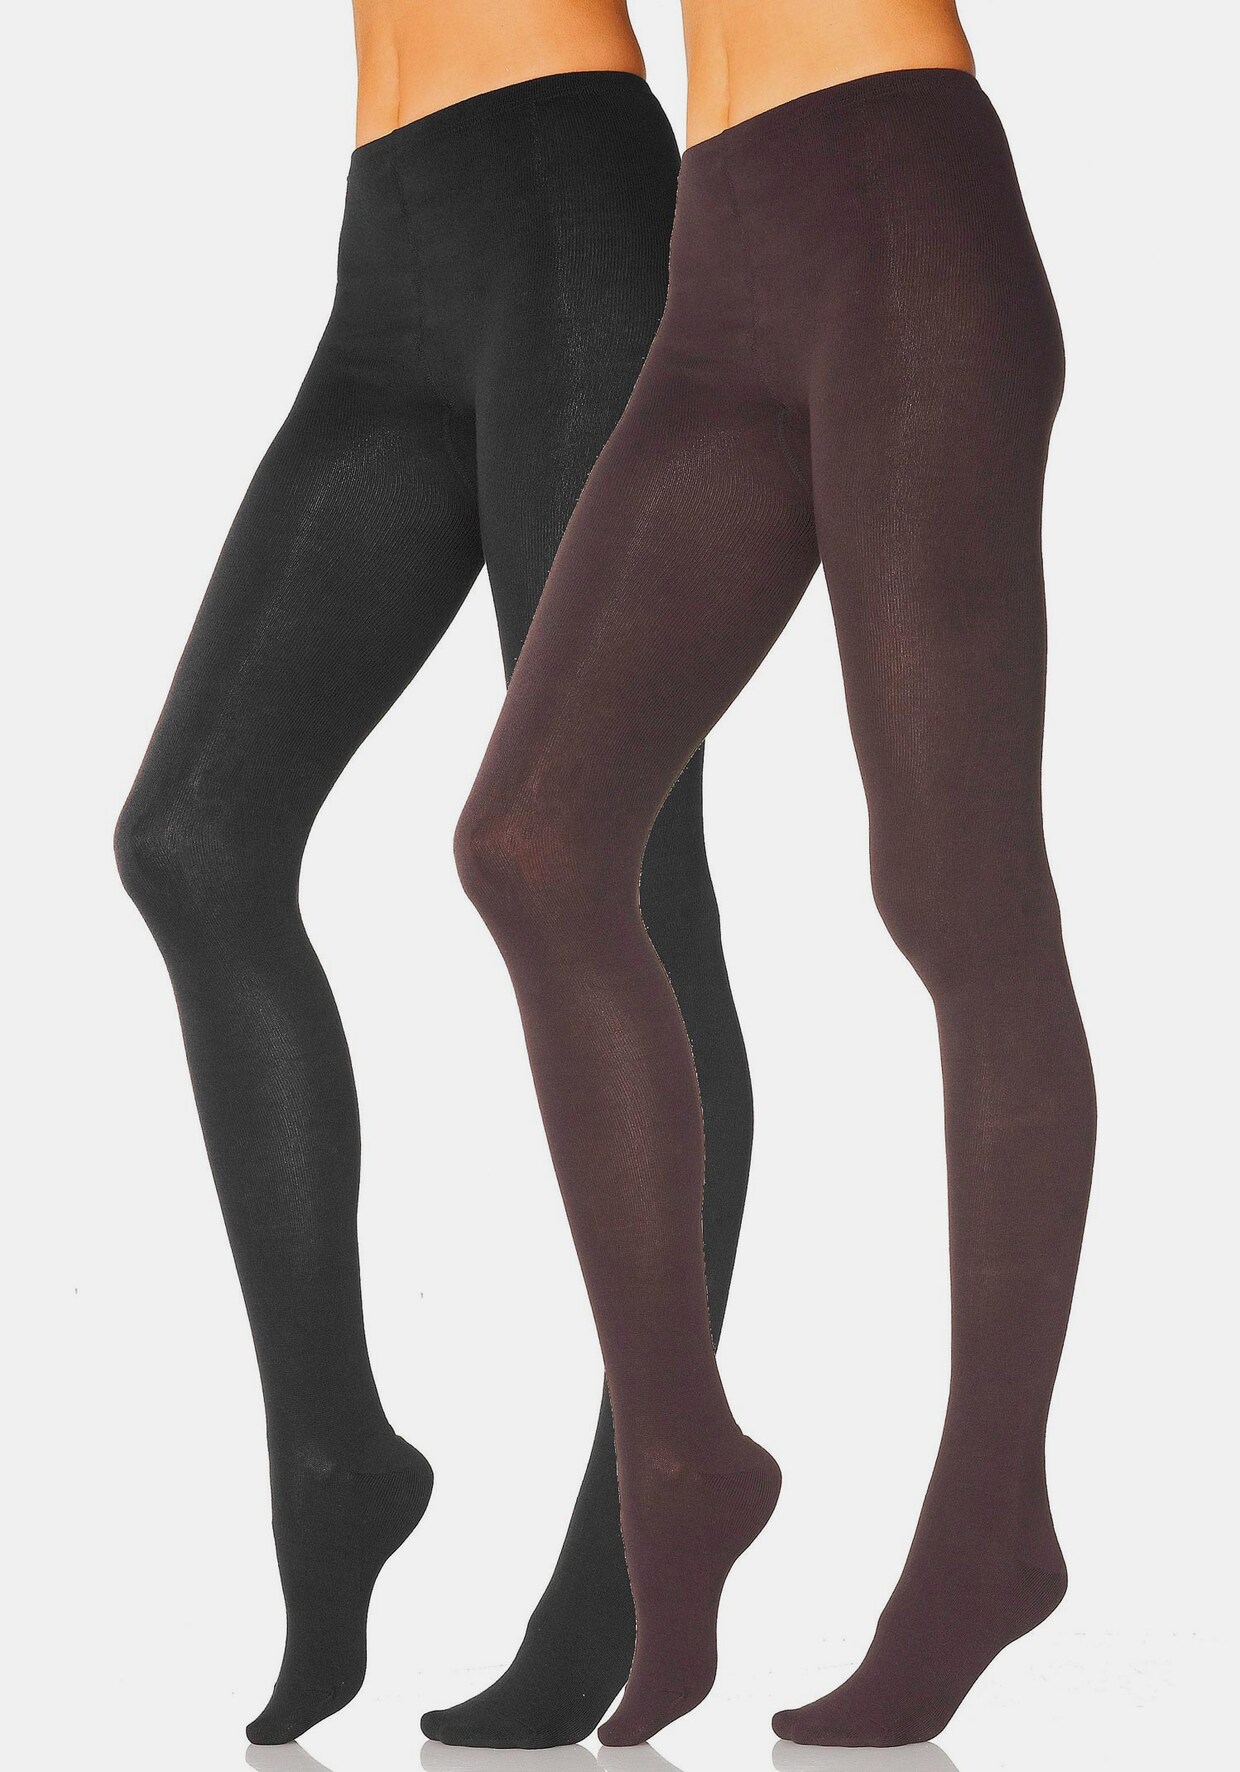 Rogo panty - 1x bruin/zwart + 1x zwart